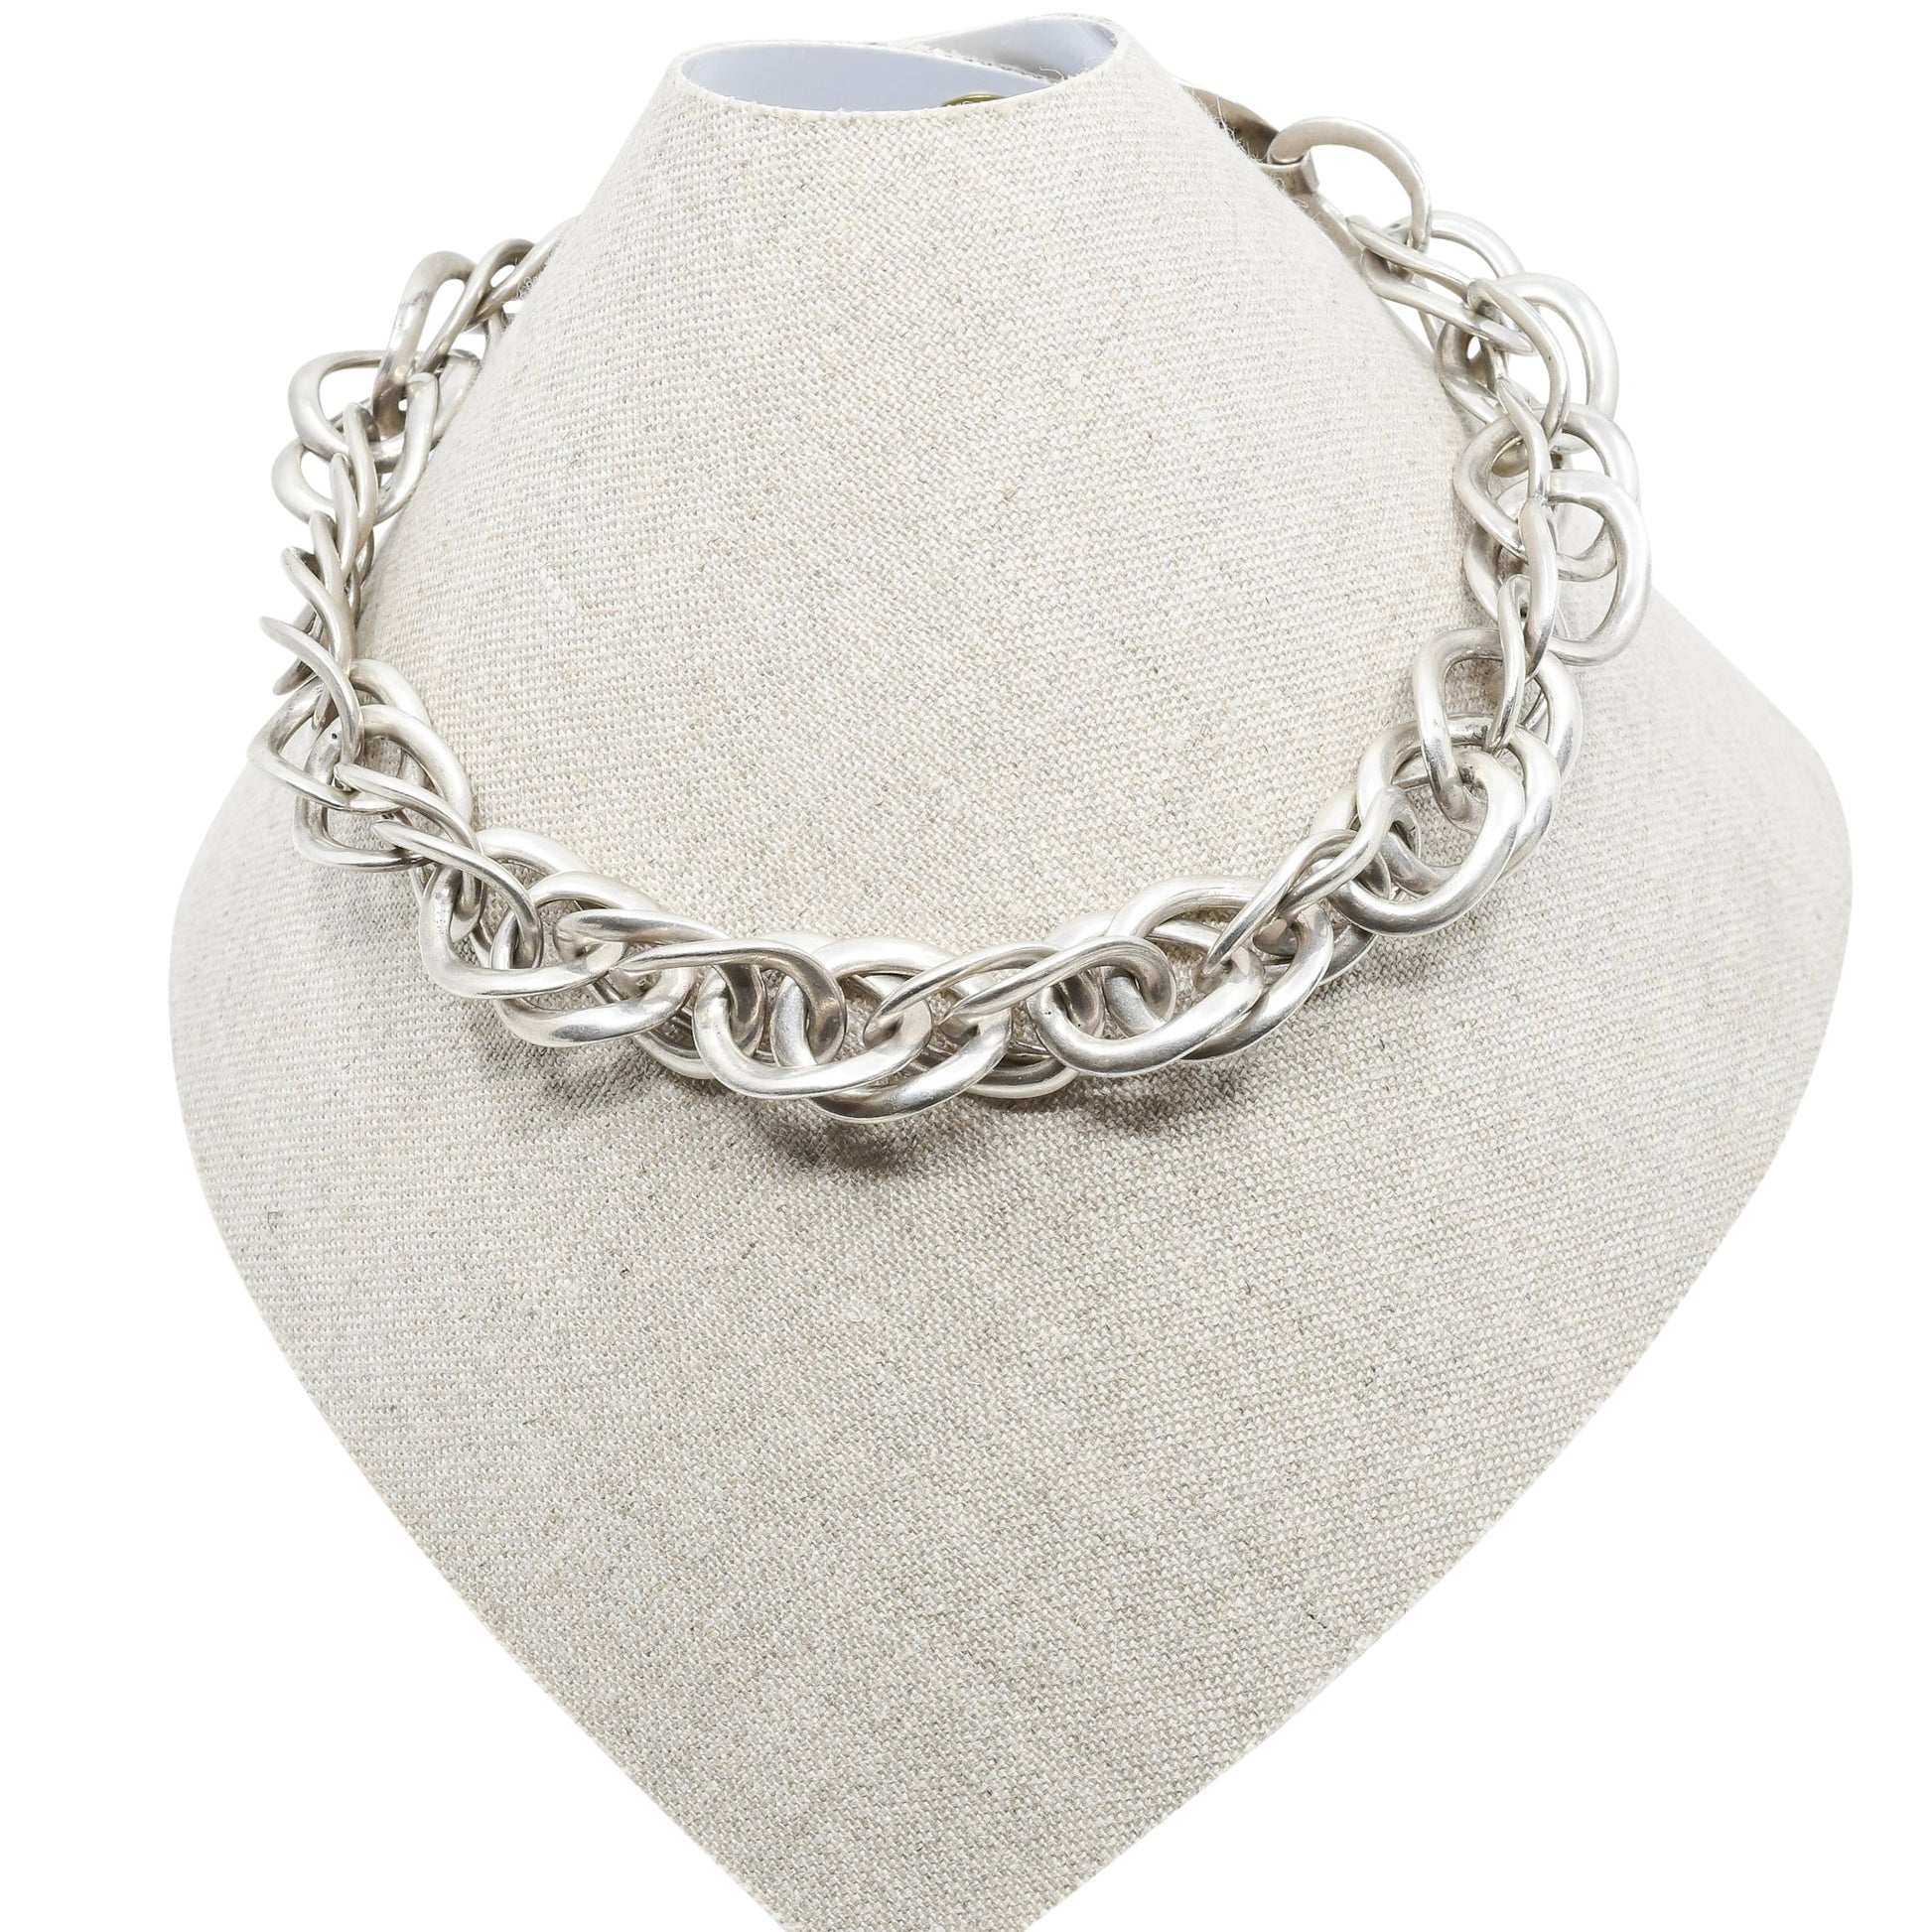 Vintage William Spratling Silver Necklace Medium Sized Links First Design Period - Turquoise & Tufa